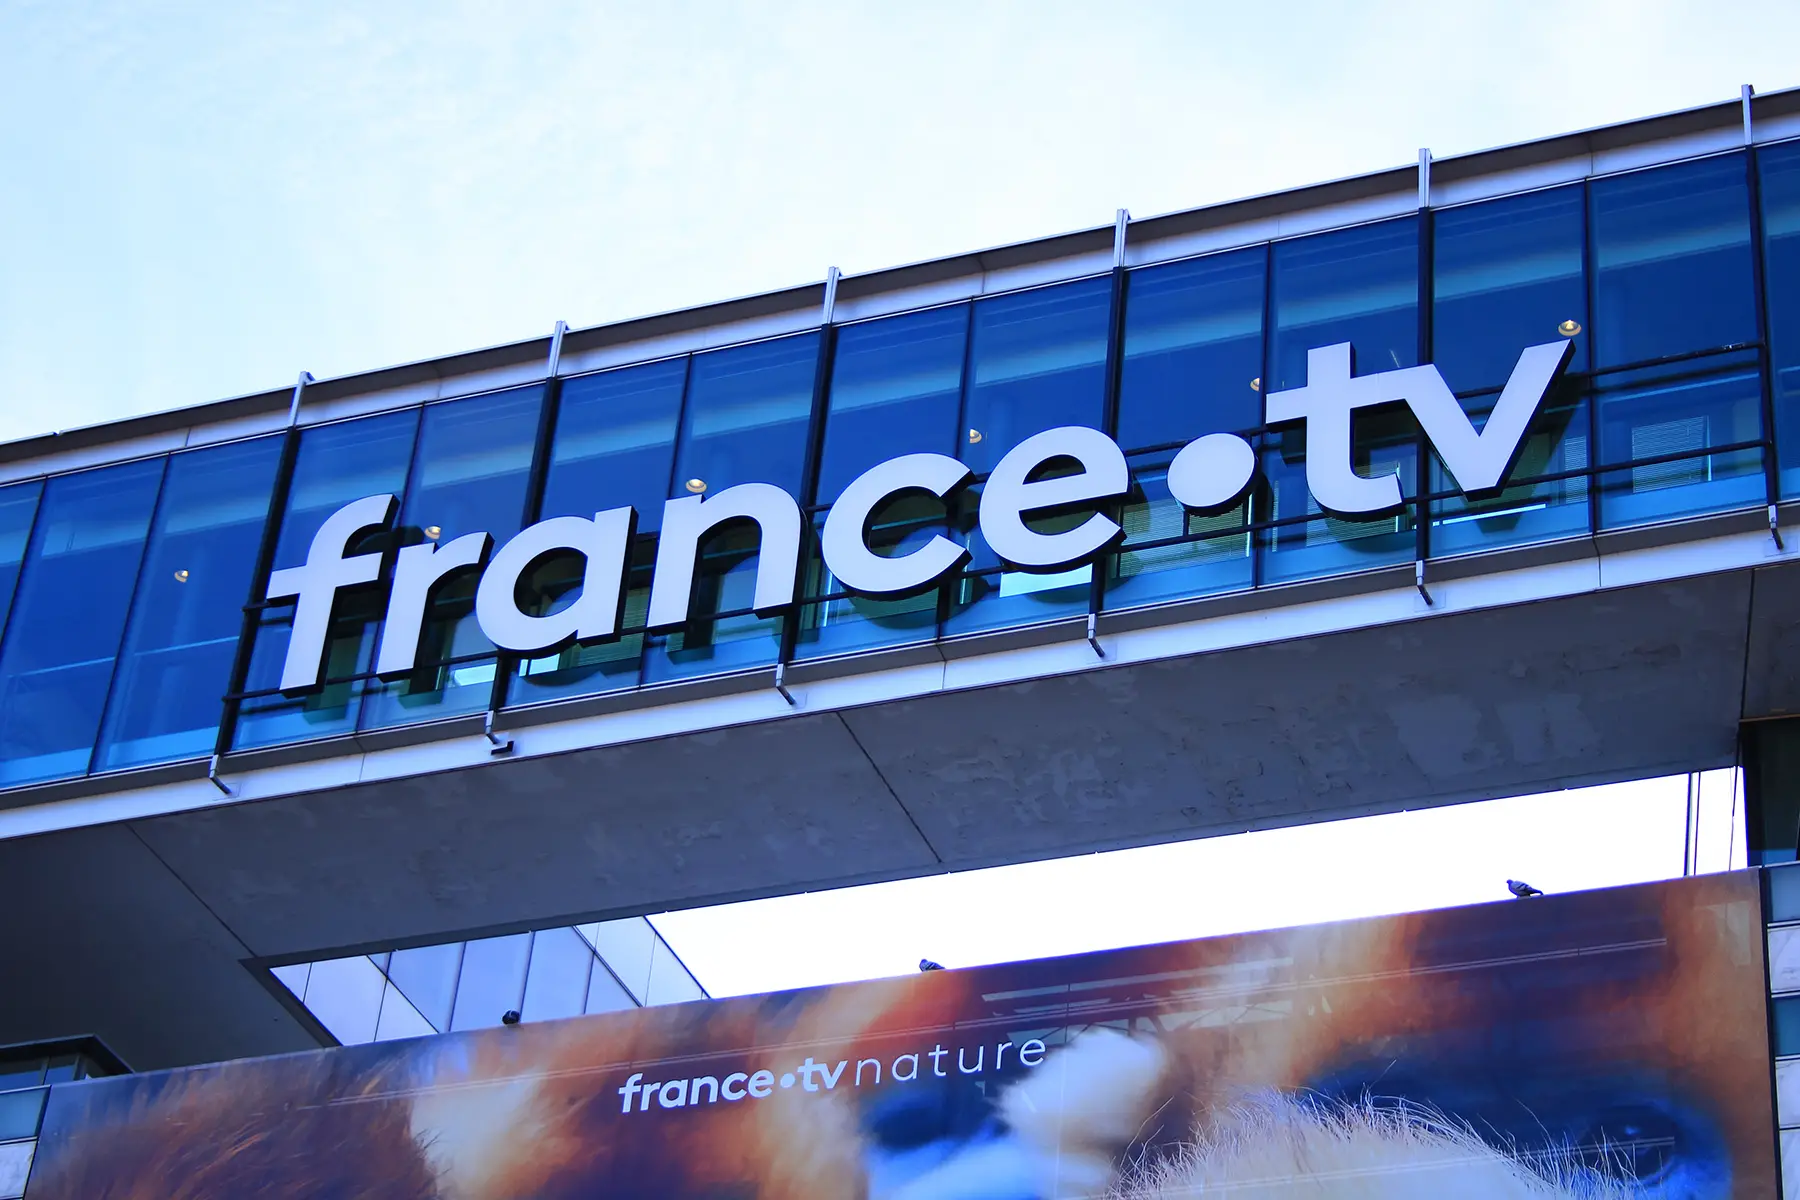 France.tv building in Paris